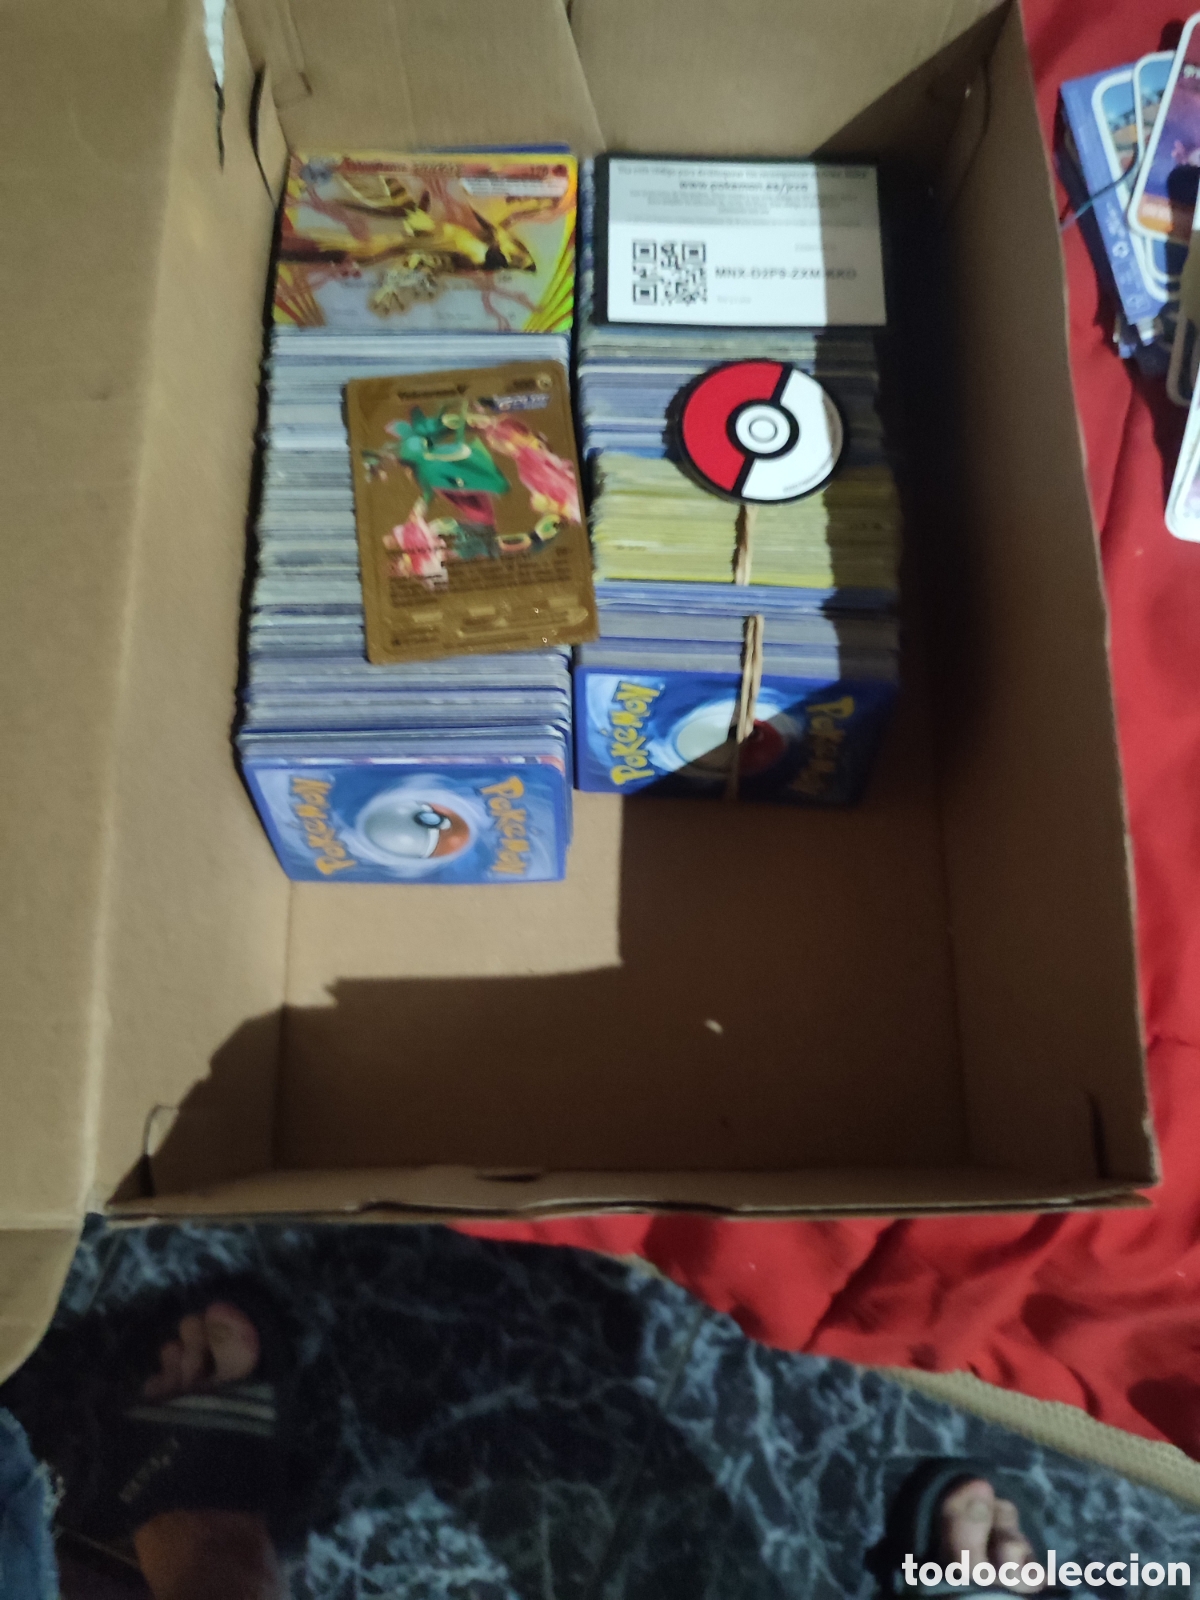 Lote impresionante de cartas pokemon 1 edición